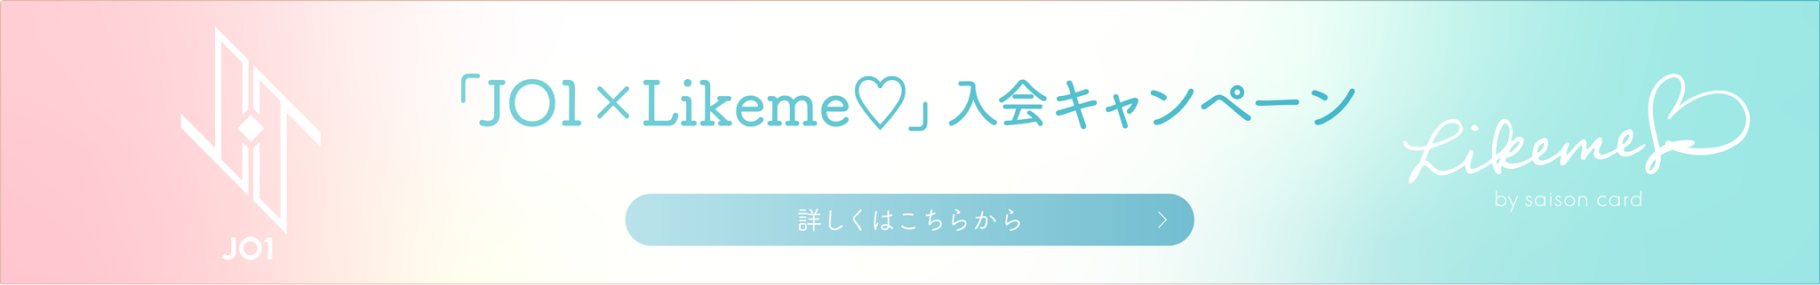 「JO1×Likeme♡」入会キャンペーン 詳しくはこちらから